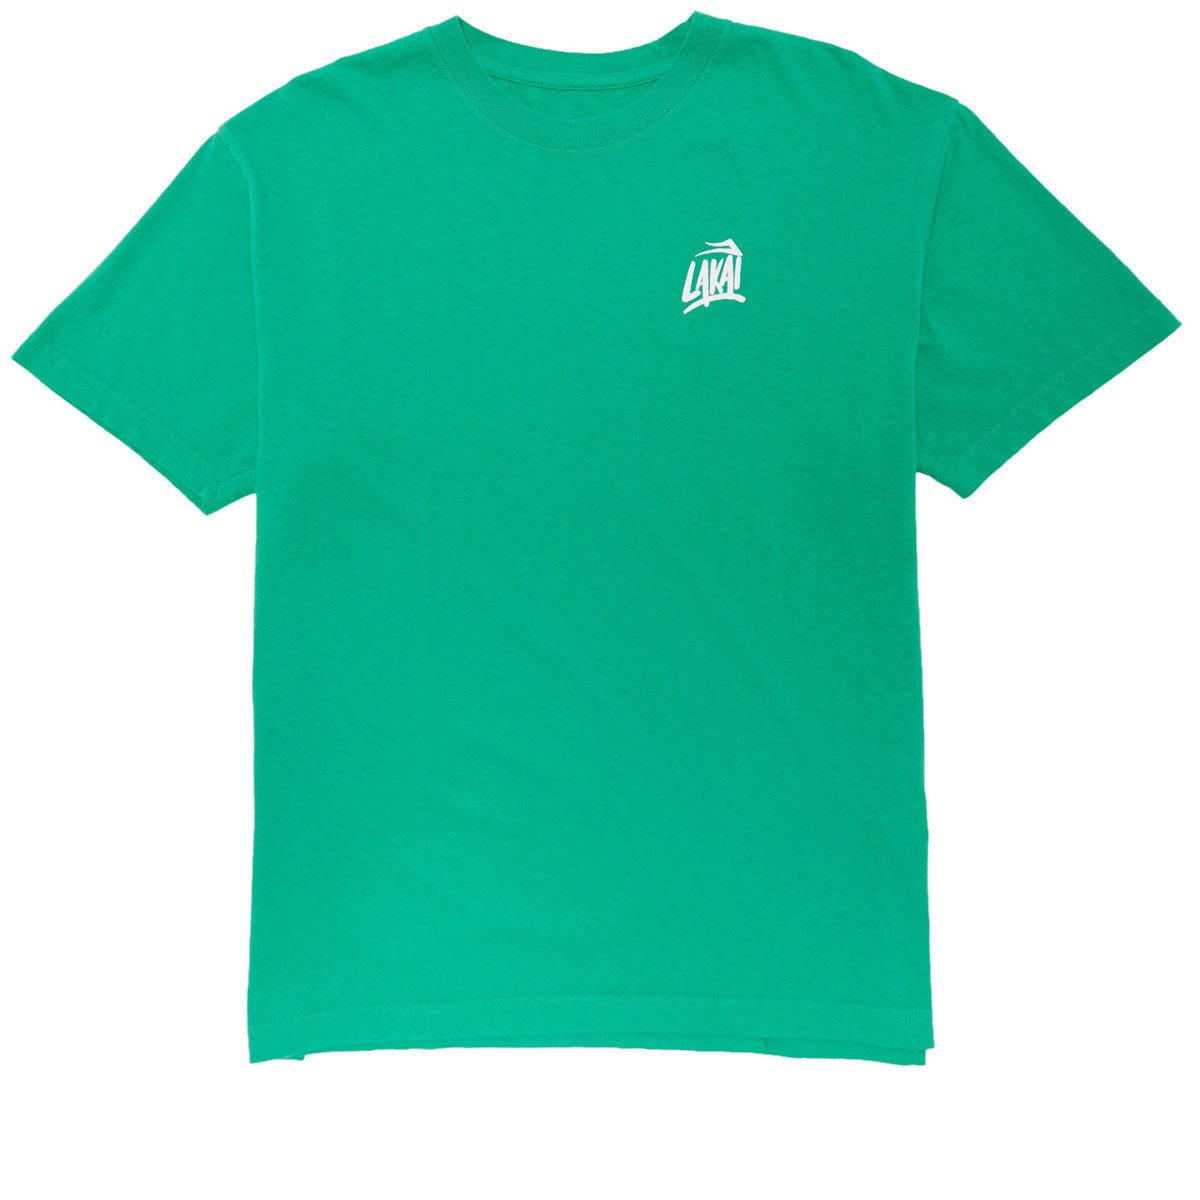 Lakai Brush T-Shirt - Kelly image 1